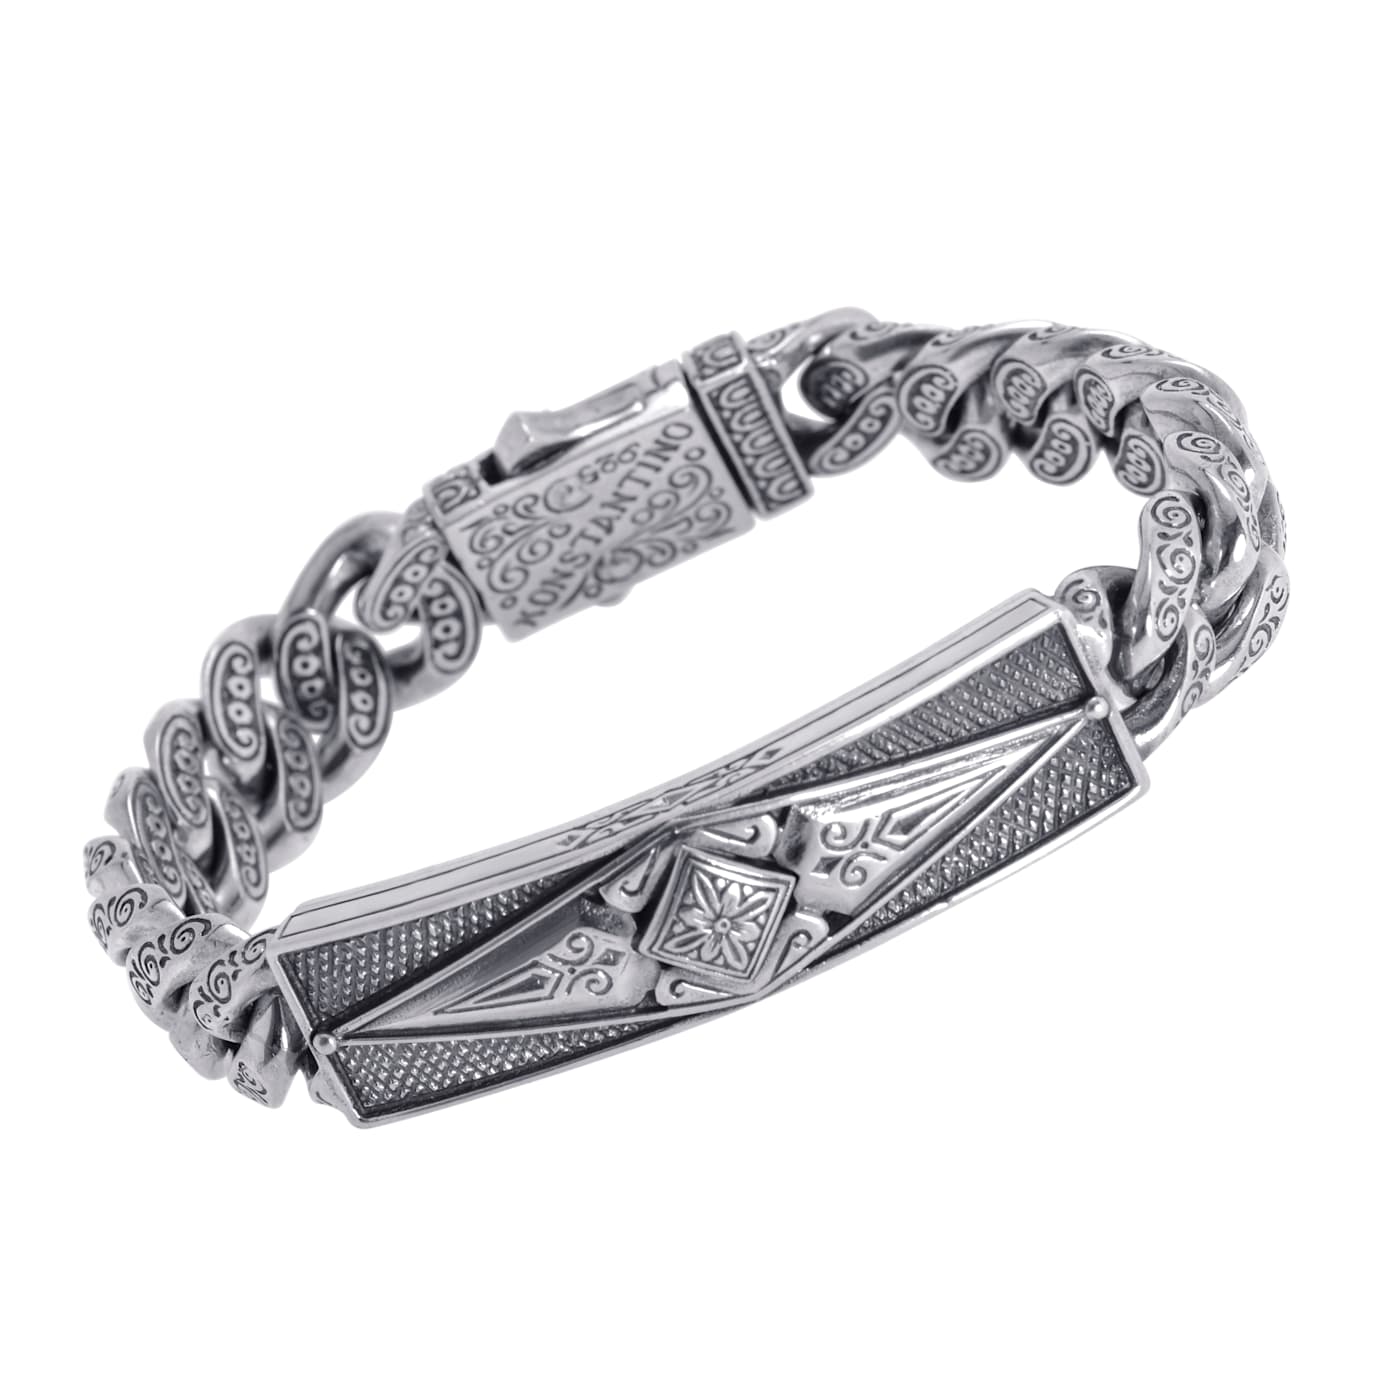 Konstantino Men's Engraved Silver Chain Bracelet